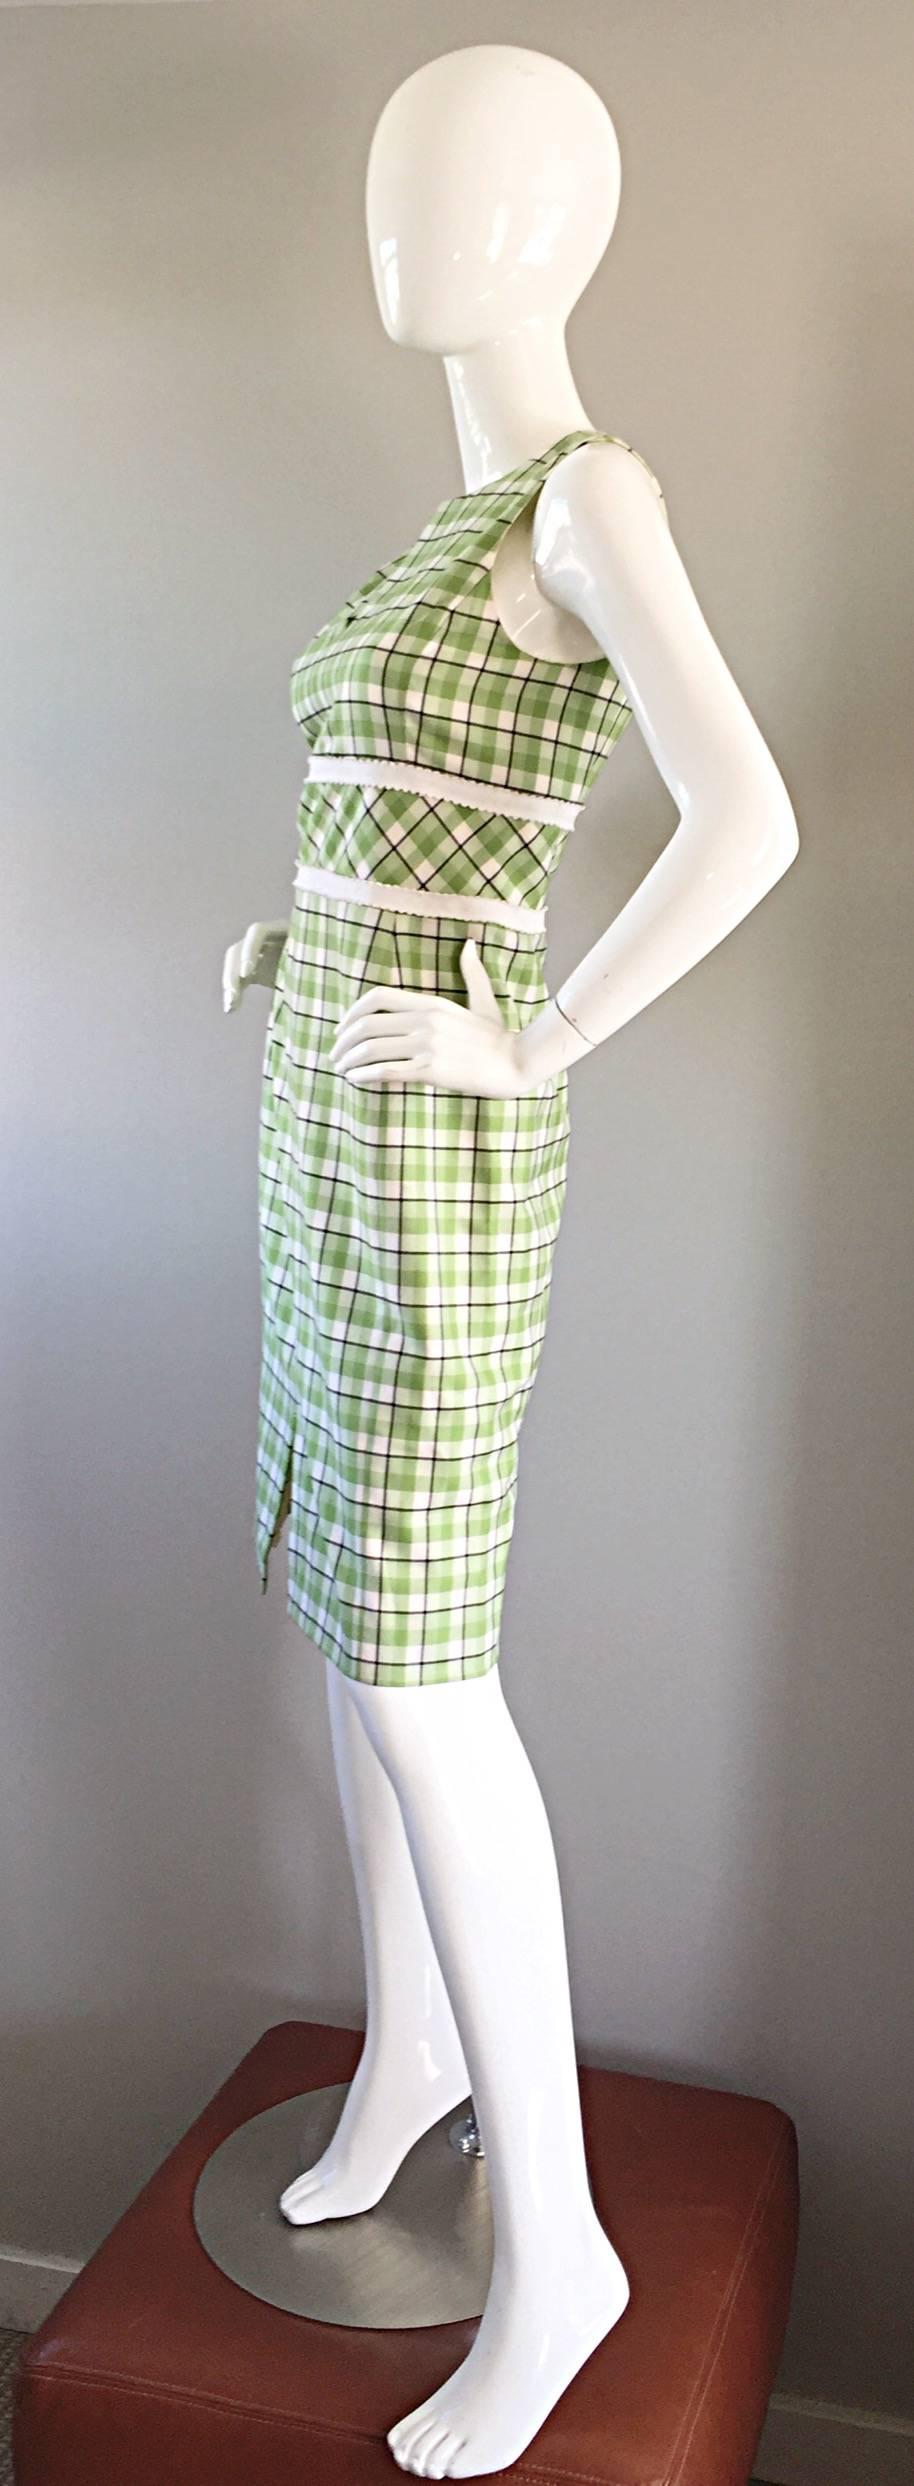 Beige Oscar de La Renta Size 6 / 8 Saks 5th Ave Green + White Checkered Plaid Dress  For Sale